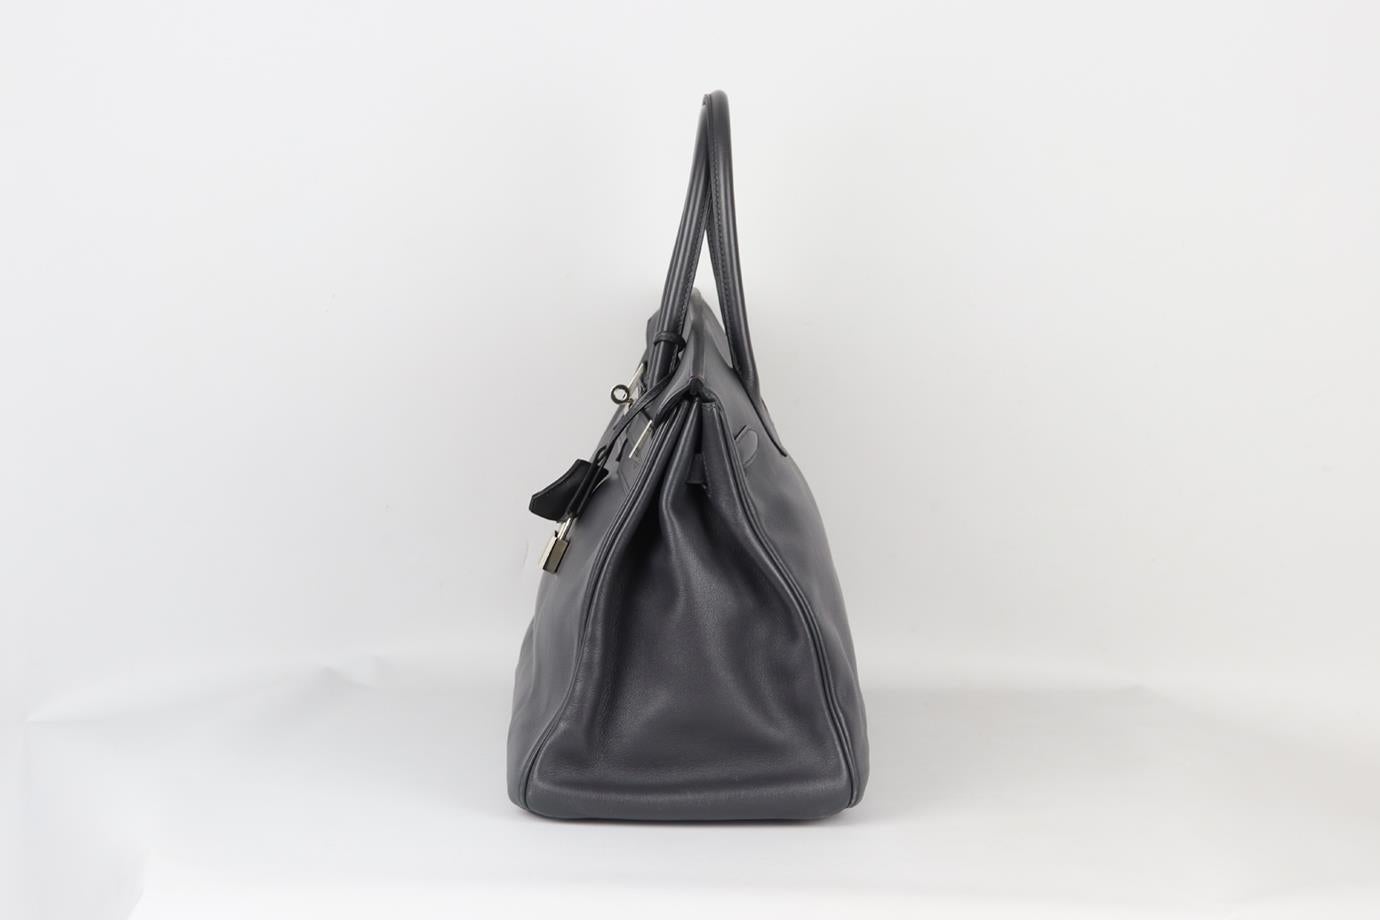 Hermès 2008 Birkin 35cm Swift Leather Bag In Excellent Condition In London, GB